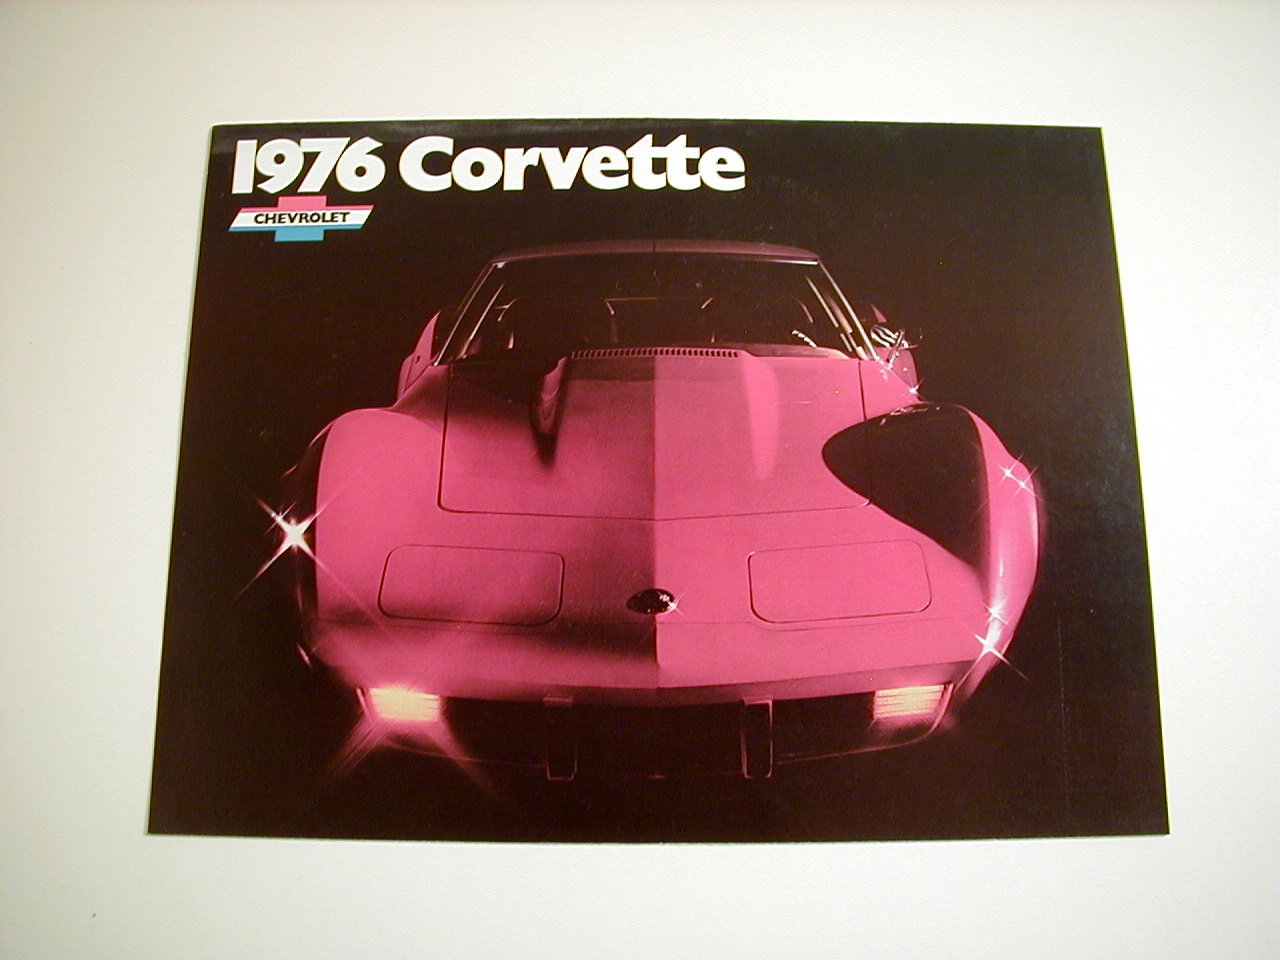 1976 Corvette Sales Brochure, Original New Old Stock